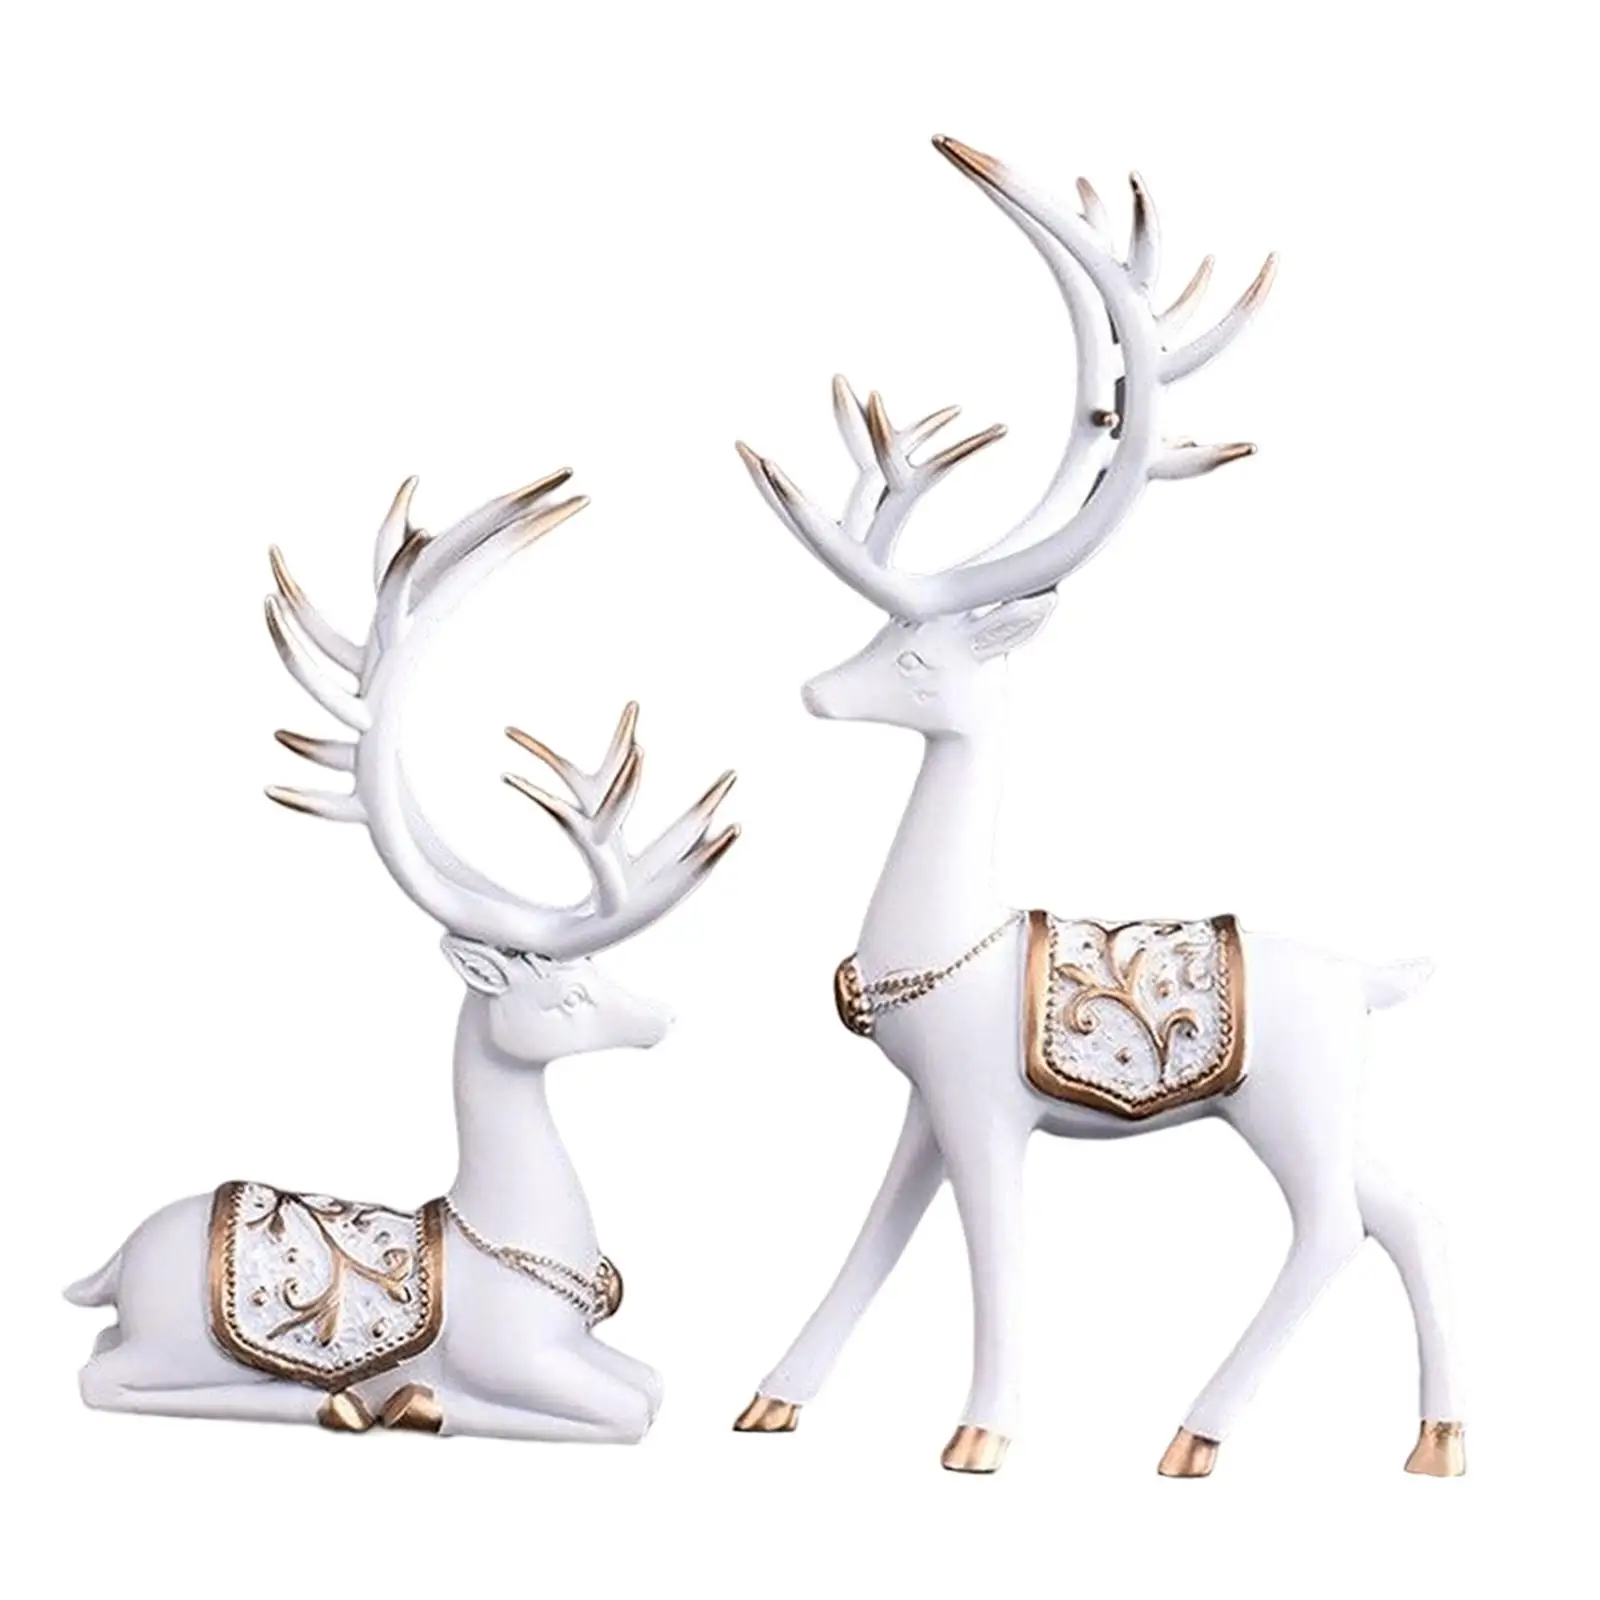 European Style Reindeer Statue, Deer Figurine Ornament Resin Collection Craft